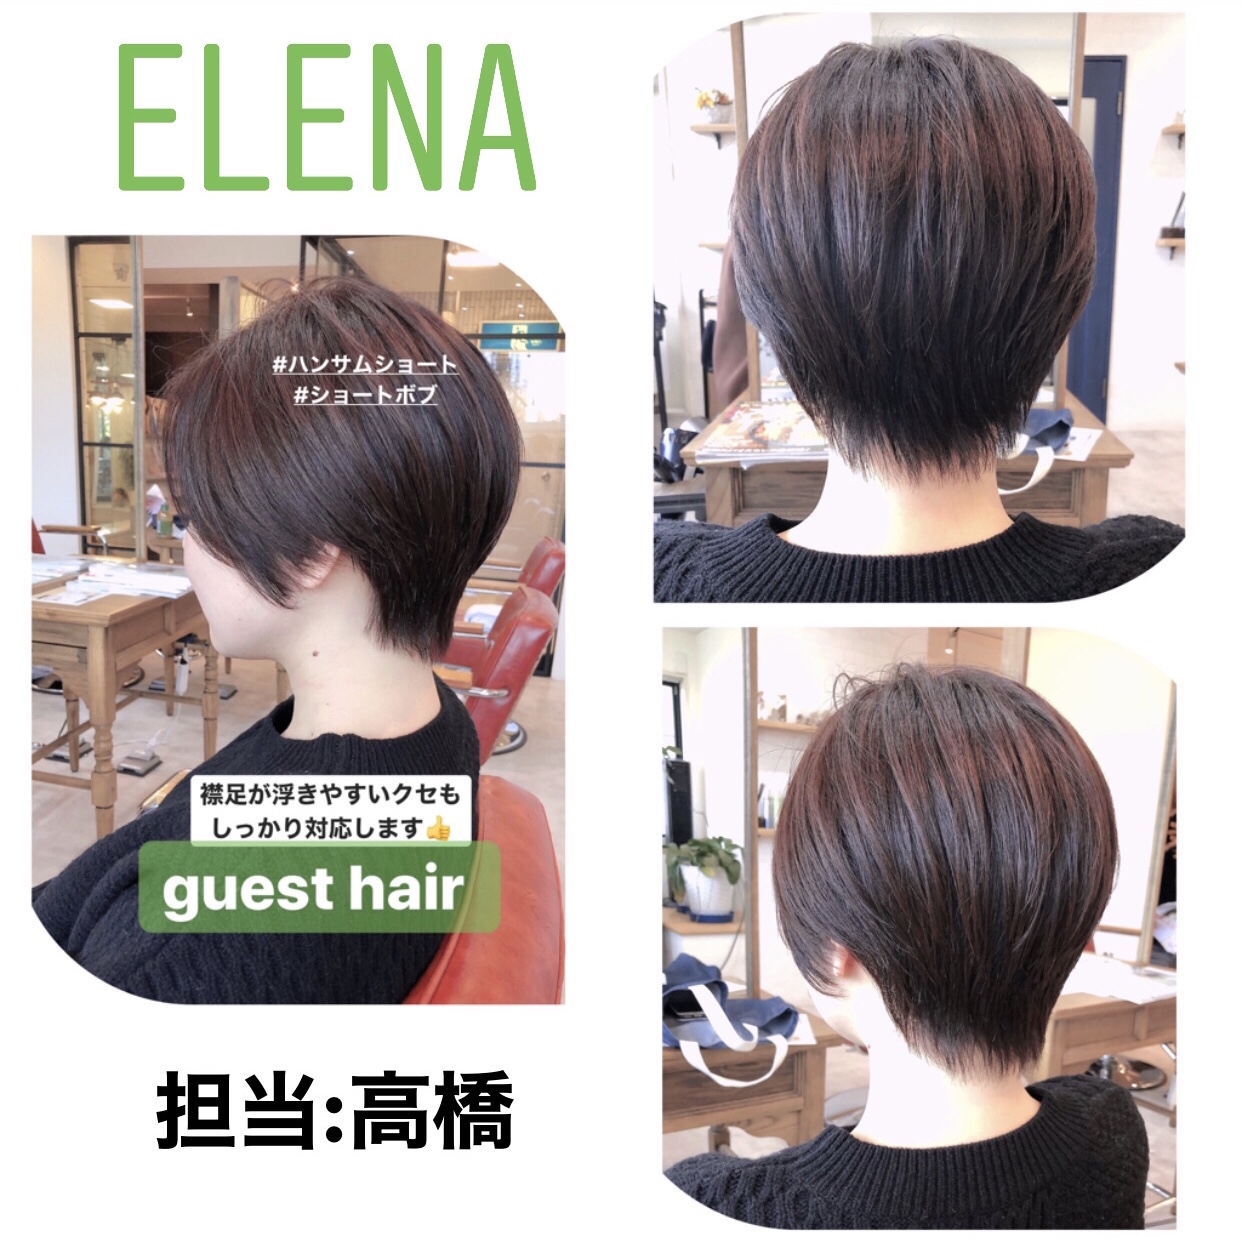 Guest Hair ハンサムショート Elena Hair